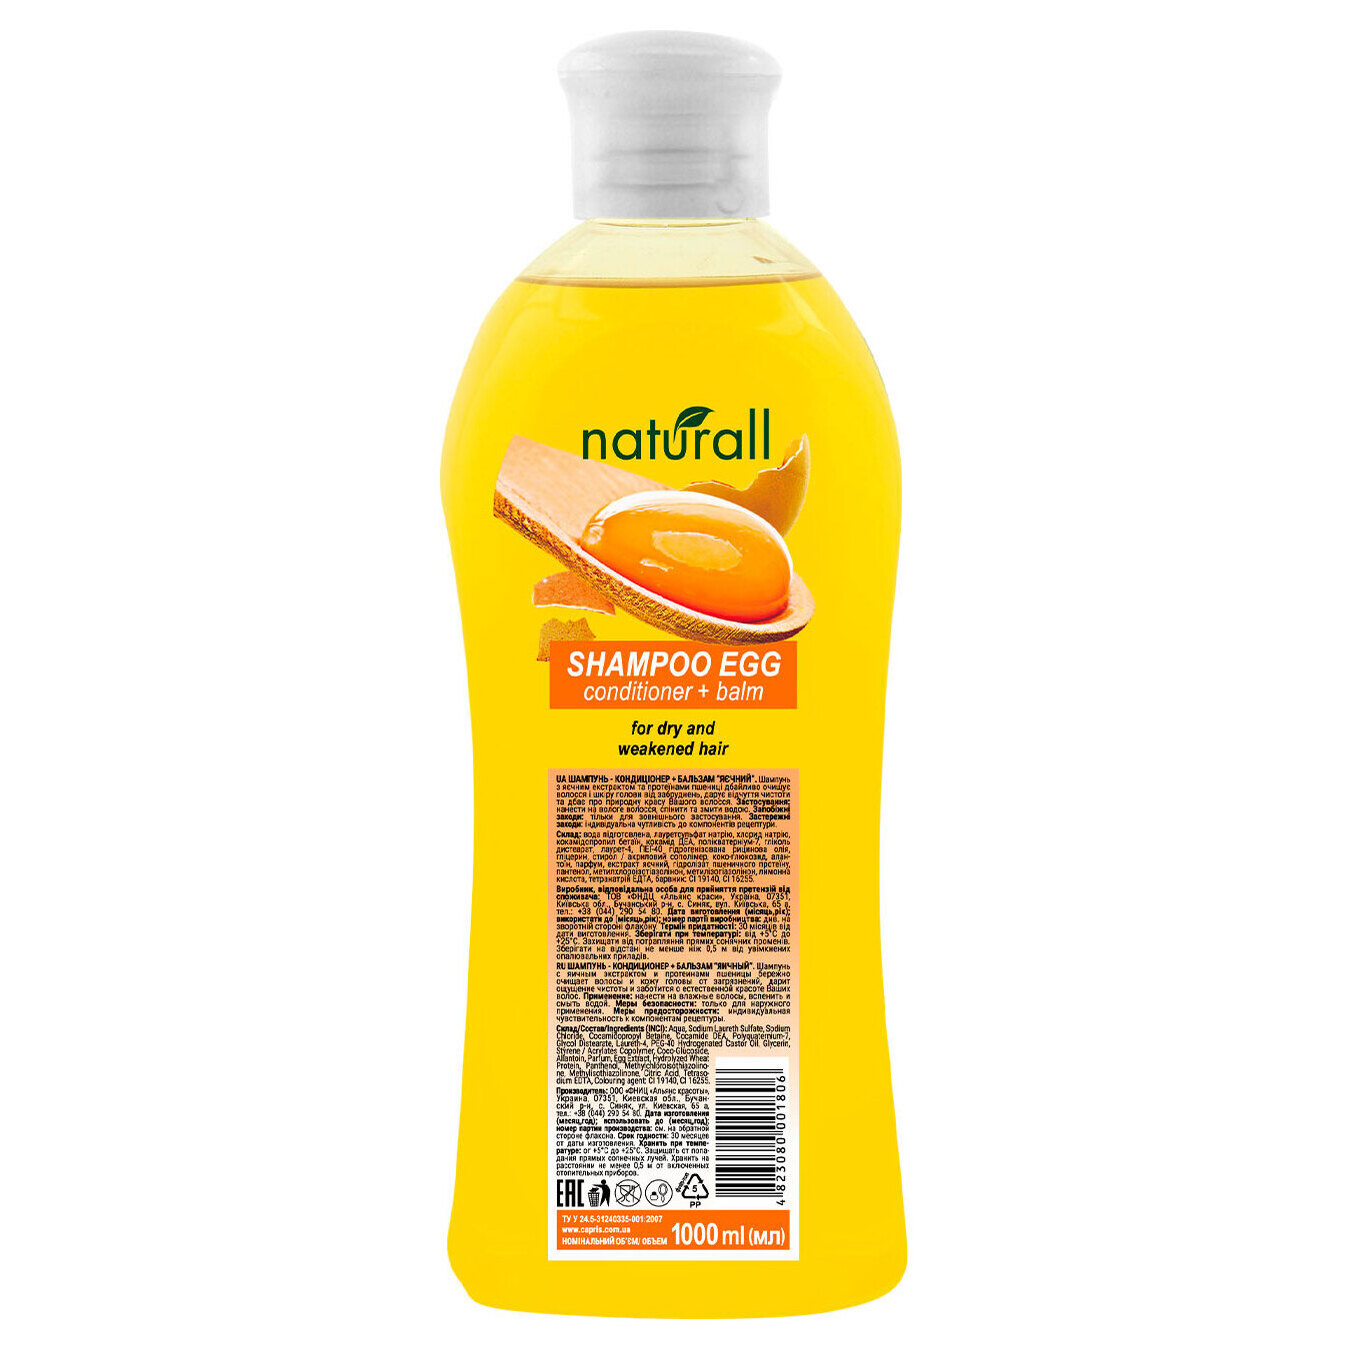 Shampoo Naturall egg conditioner + balm 1l